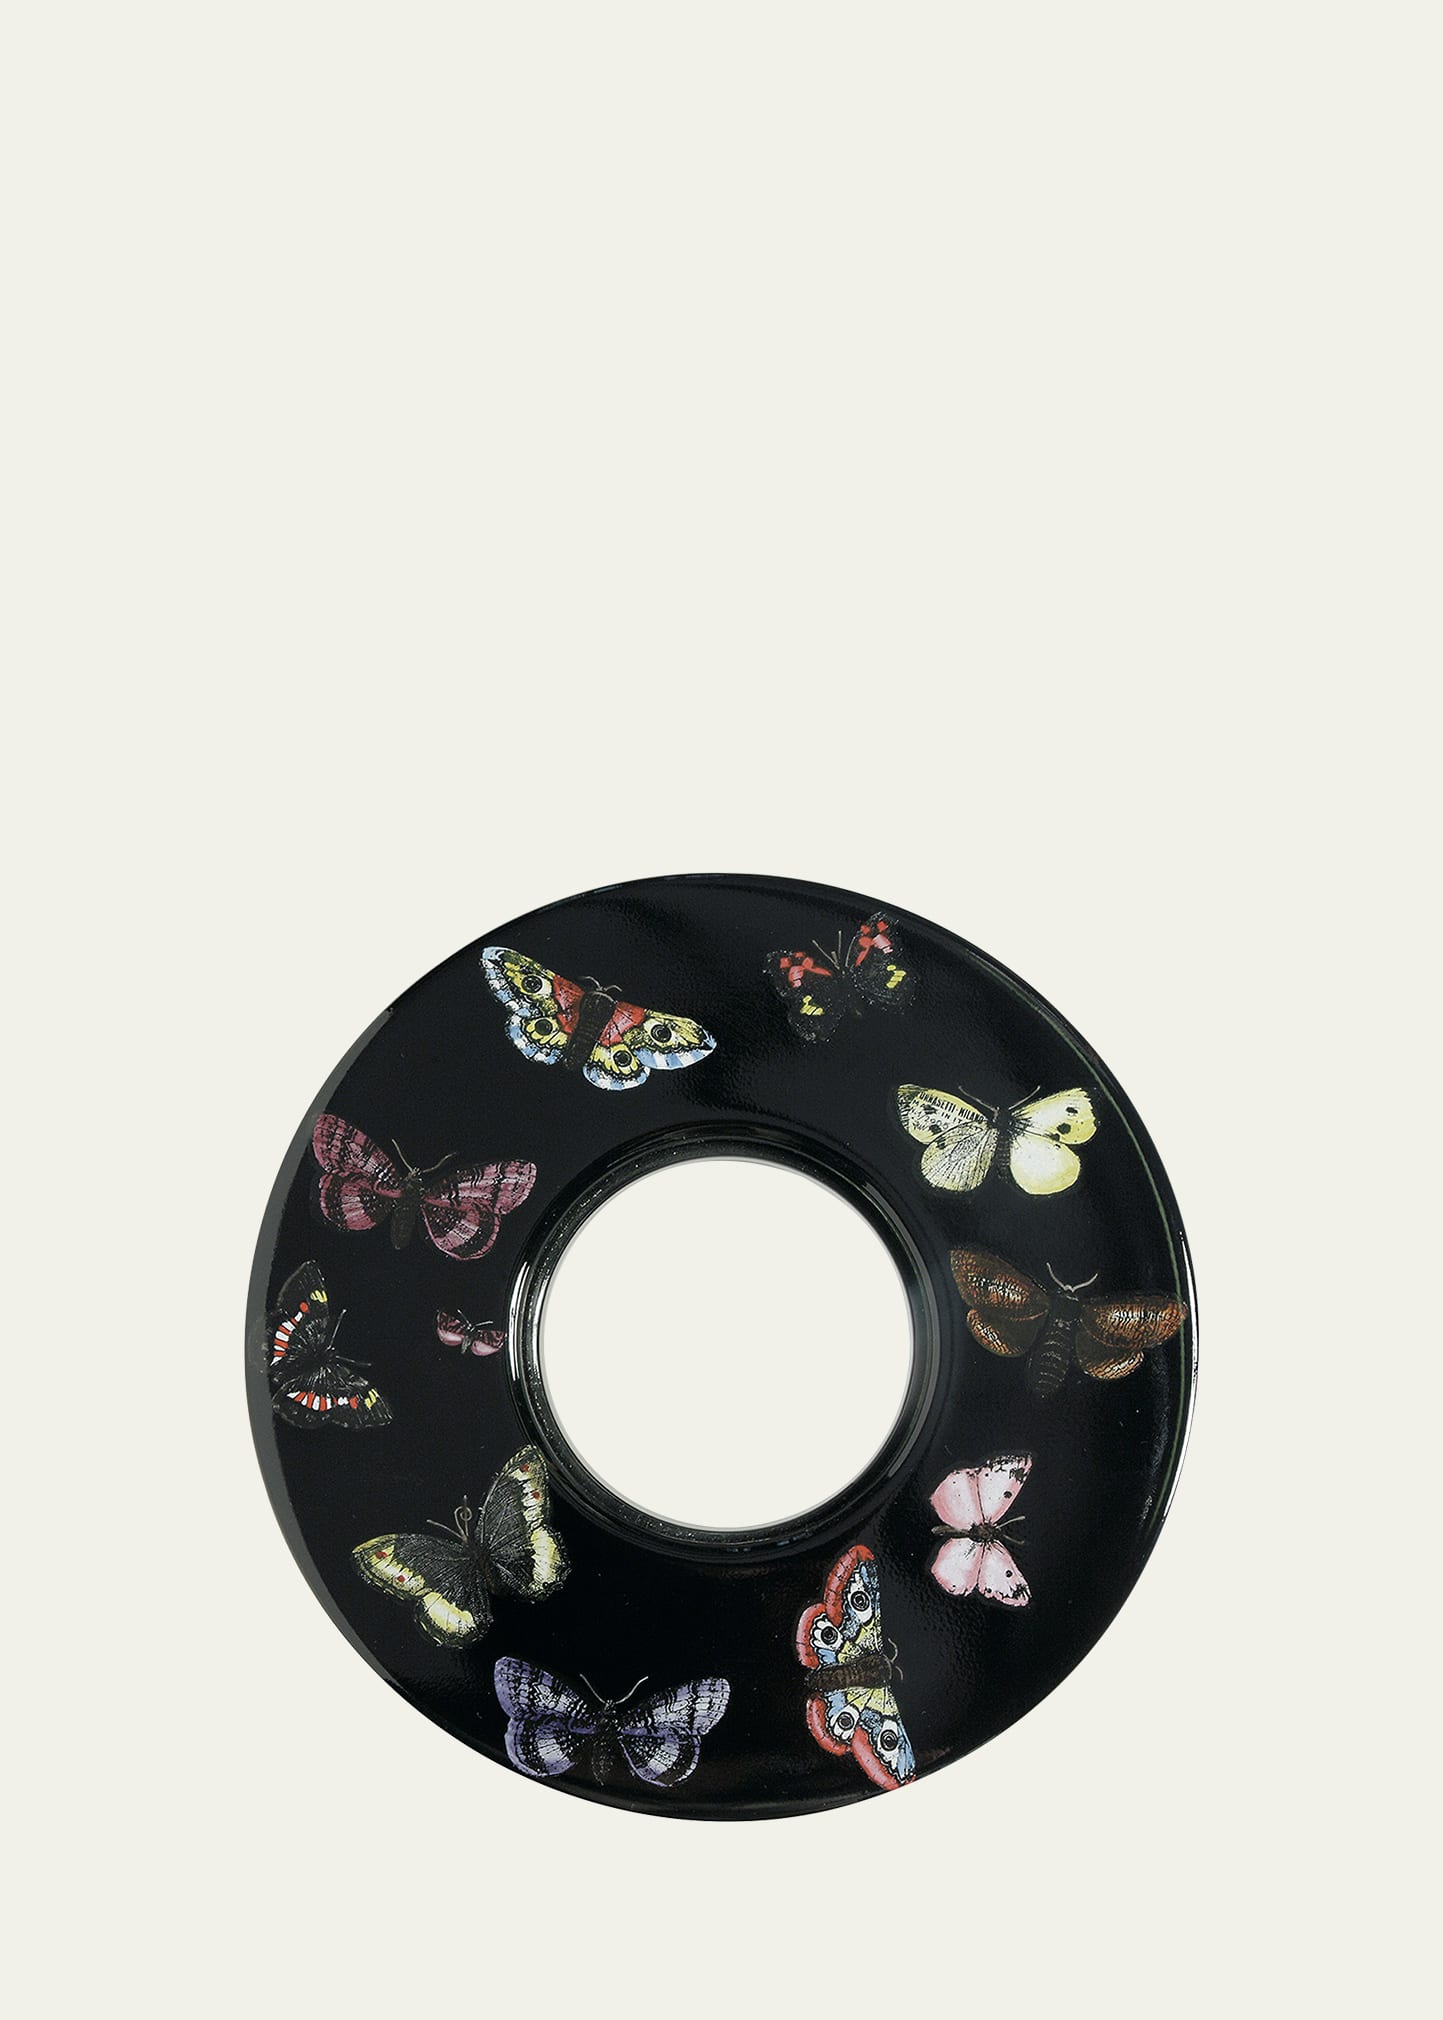 Frame With Convex Mirror Farfalle Butterflies